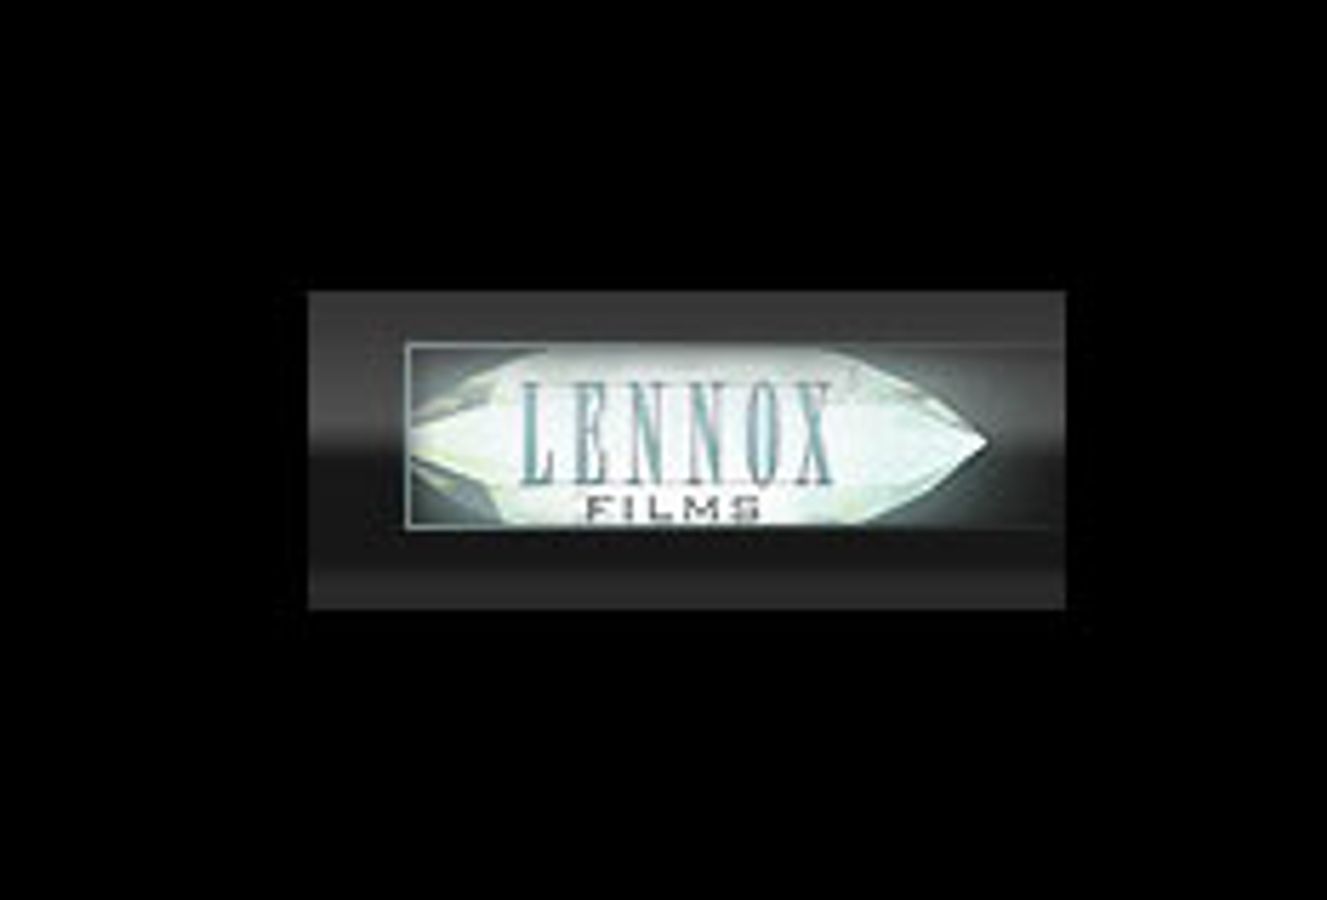 Lennox Films